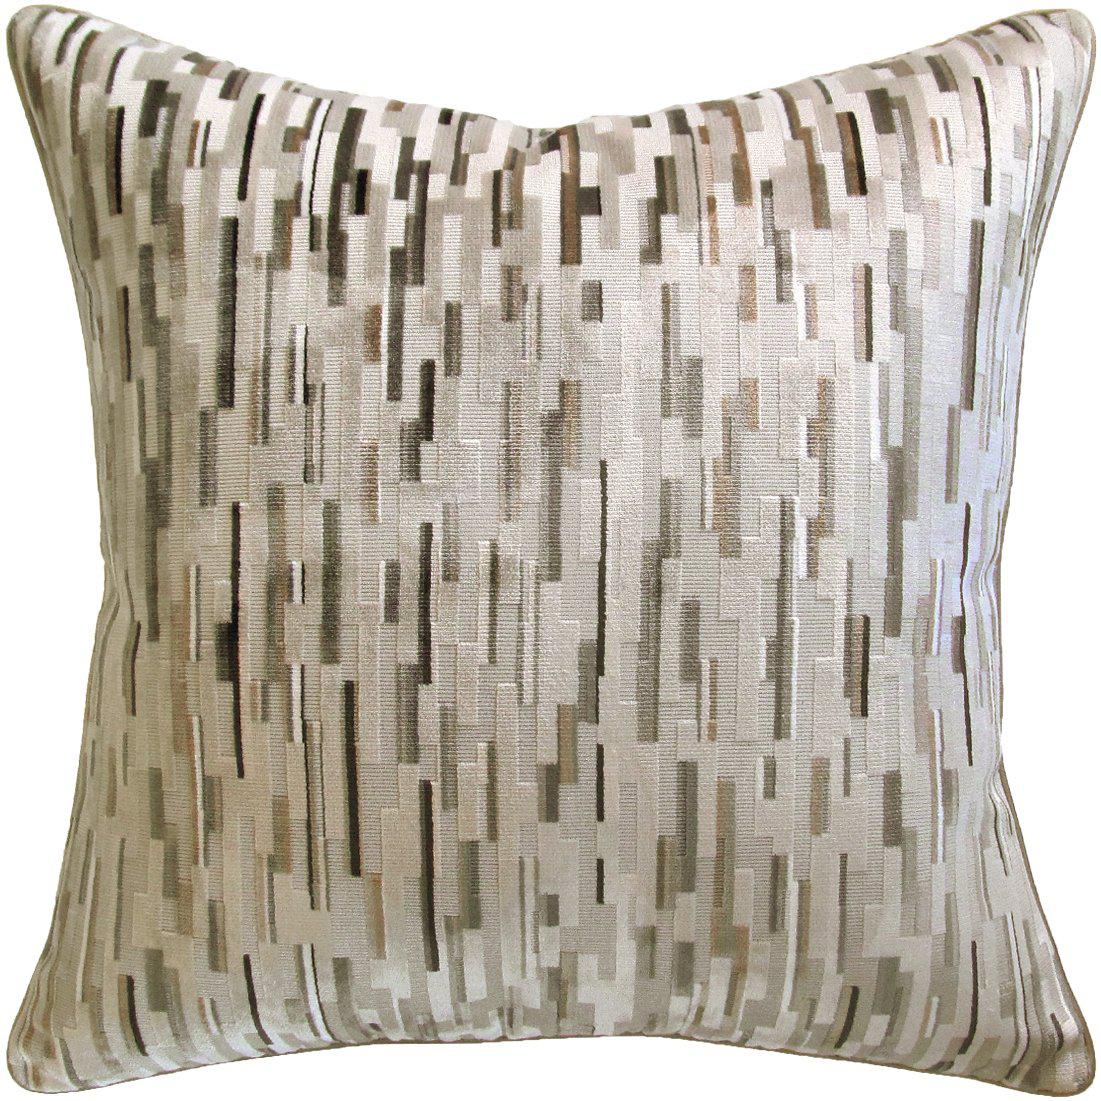 Fairford-Ryan Studio-Decorative Pillows-Artistic Elements